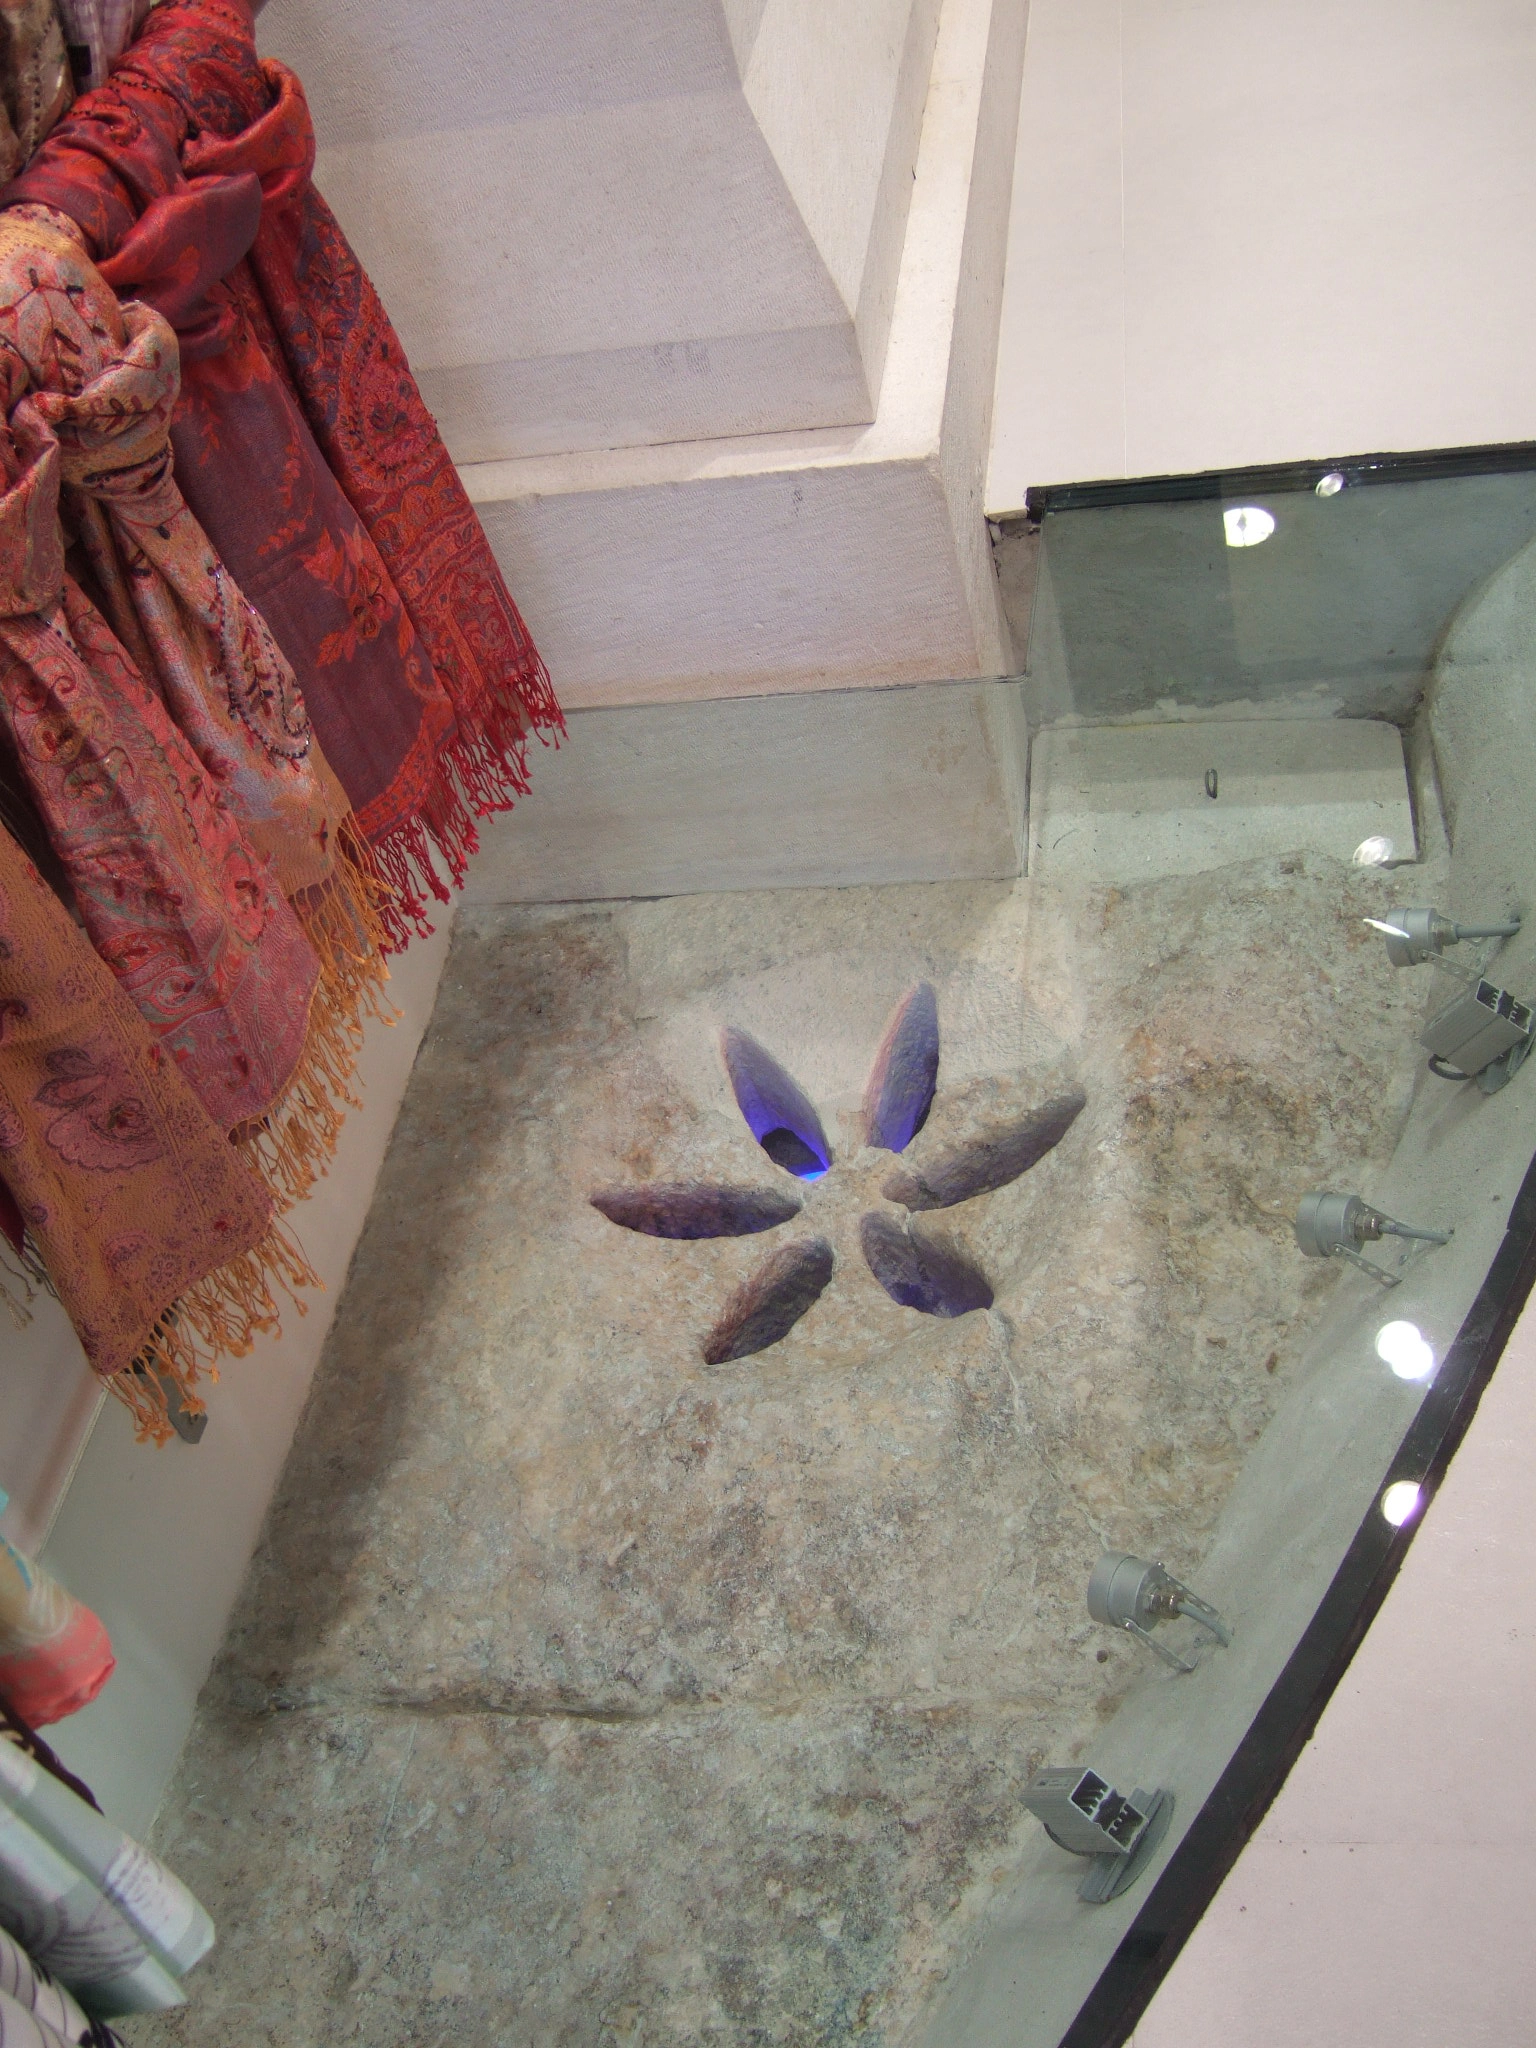 Muzejski eksponati, Croata Museum Concept Shop, Split